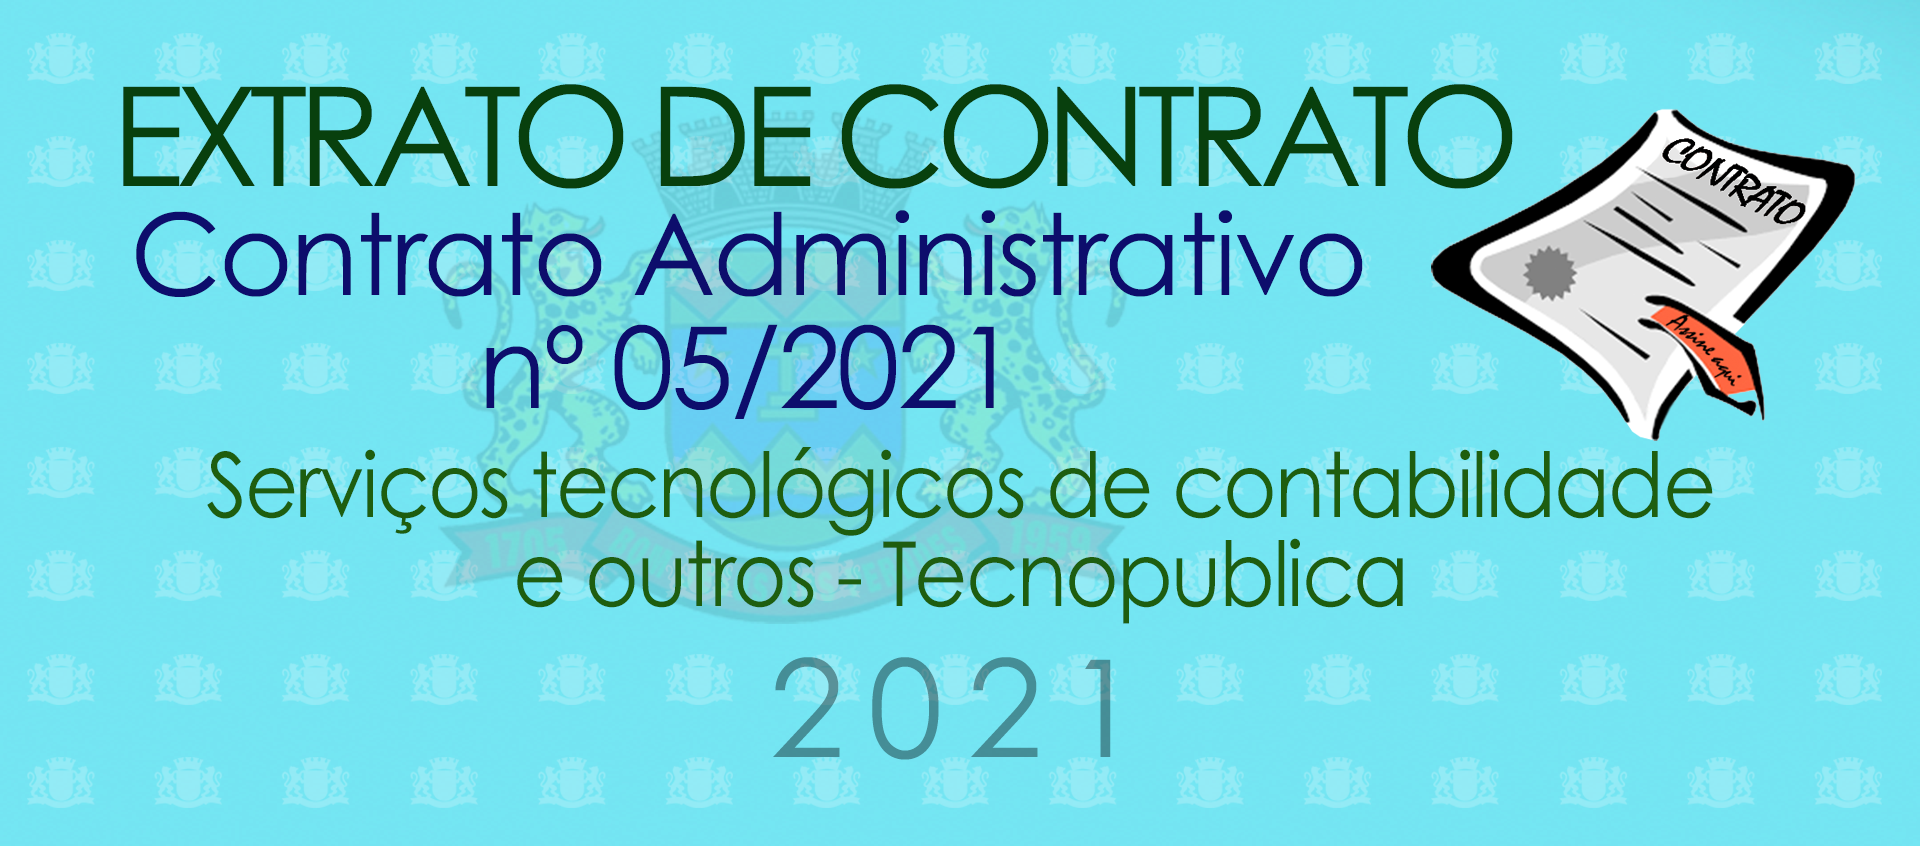 Extrato de Contrato Administrativo nº 05 de 2021